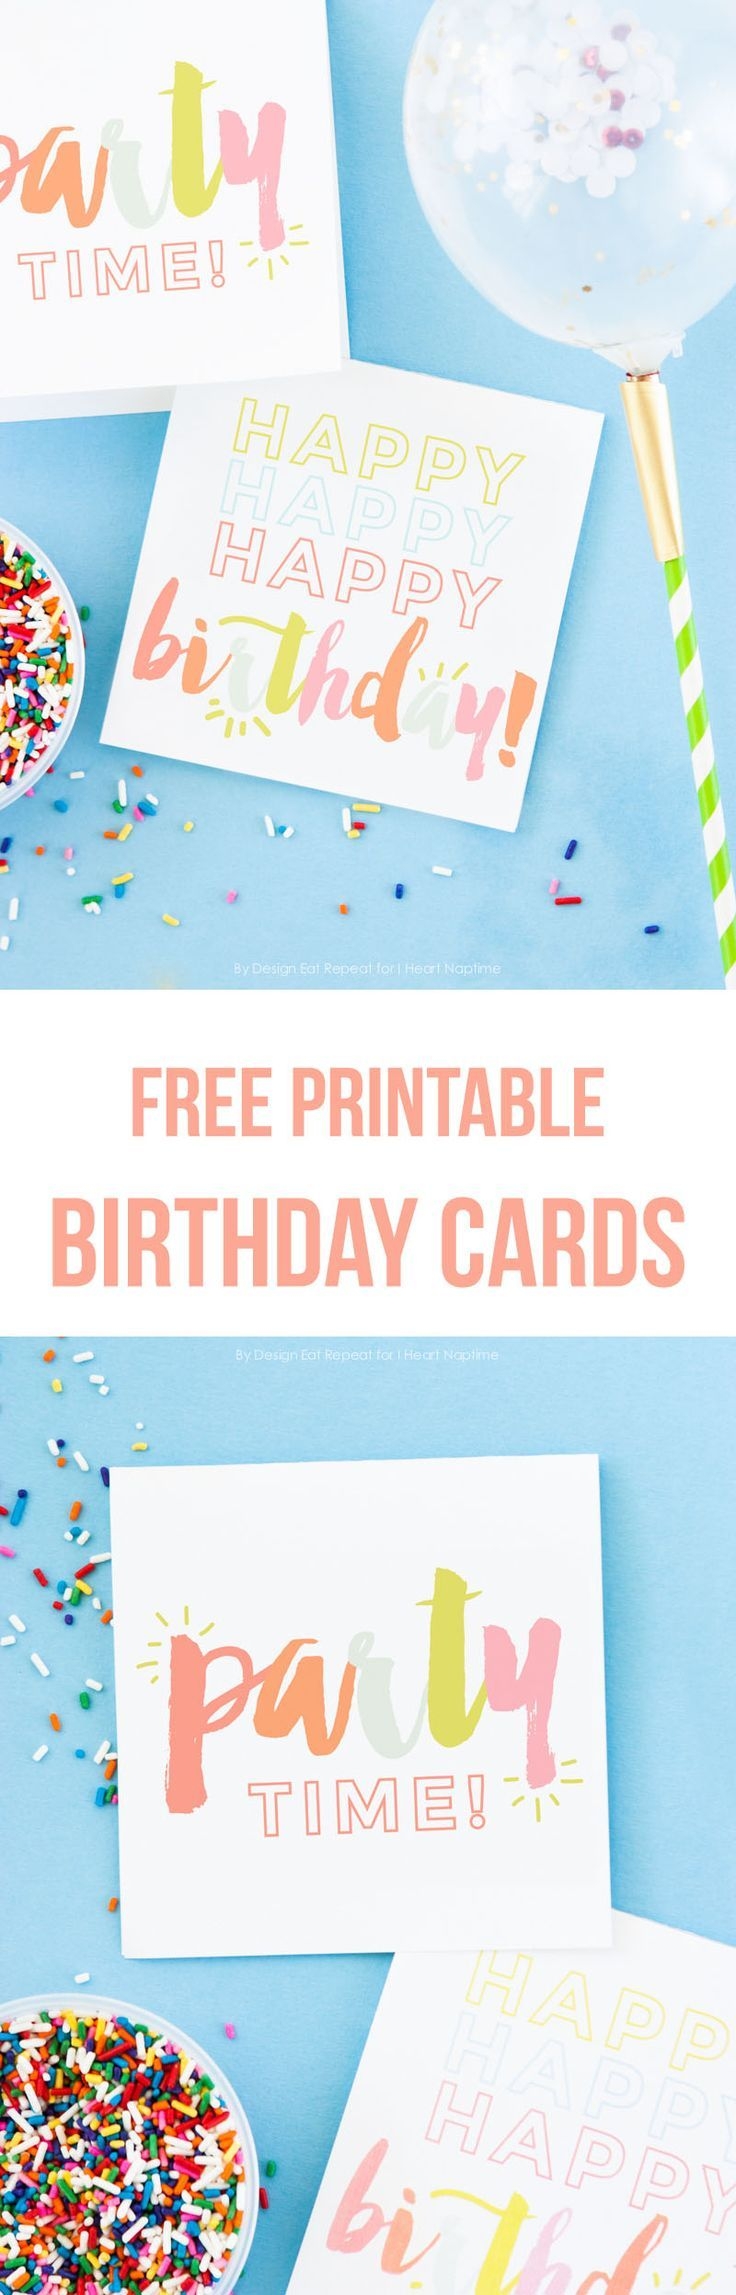 FREE Printable Birthday Cards The Inspiration Board Free Printable Birthday Cards Birthday Card Printable Birthday Card Template Free - Free Printable Birthday Invitations Pinterest